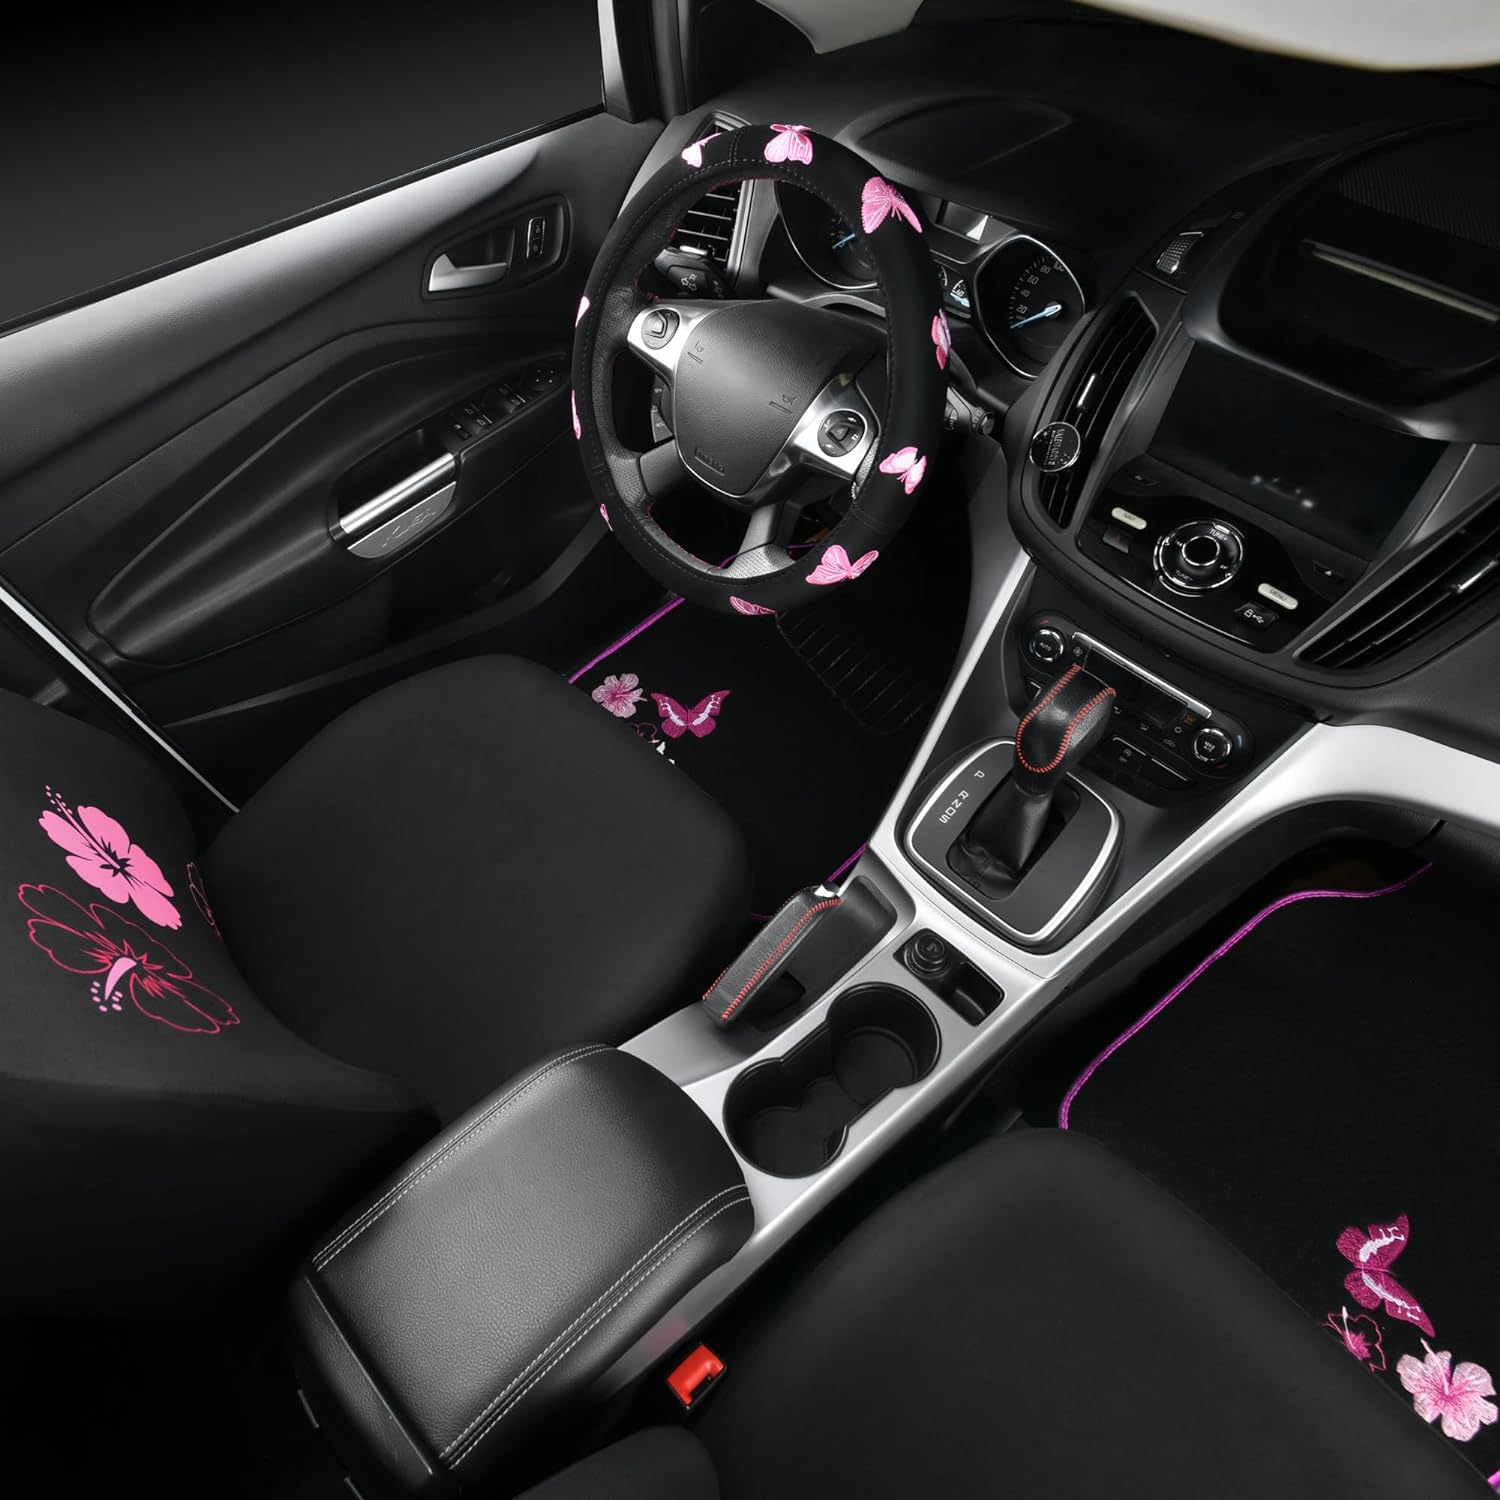 CAR PASS Embroidery Butterfly and Flower Car Floor Mats, Pink Car Floor Mats Universal Fit 95% Automotive,SUVS,Sedan,Vans,for Cute Women,Girly,Set of 4